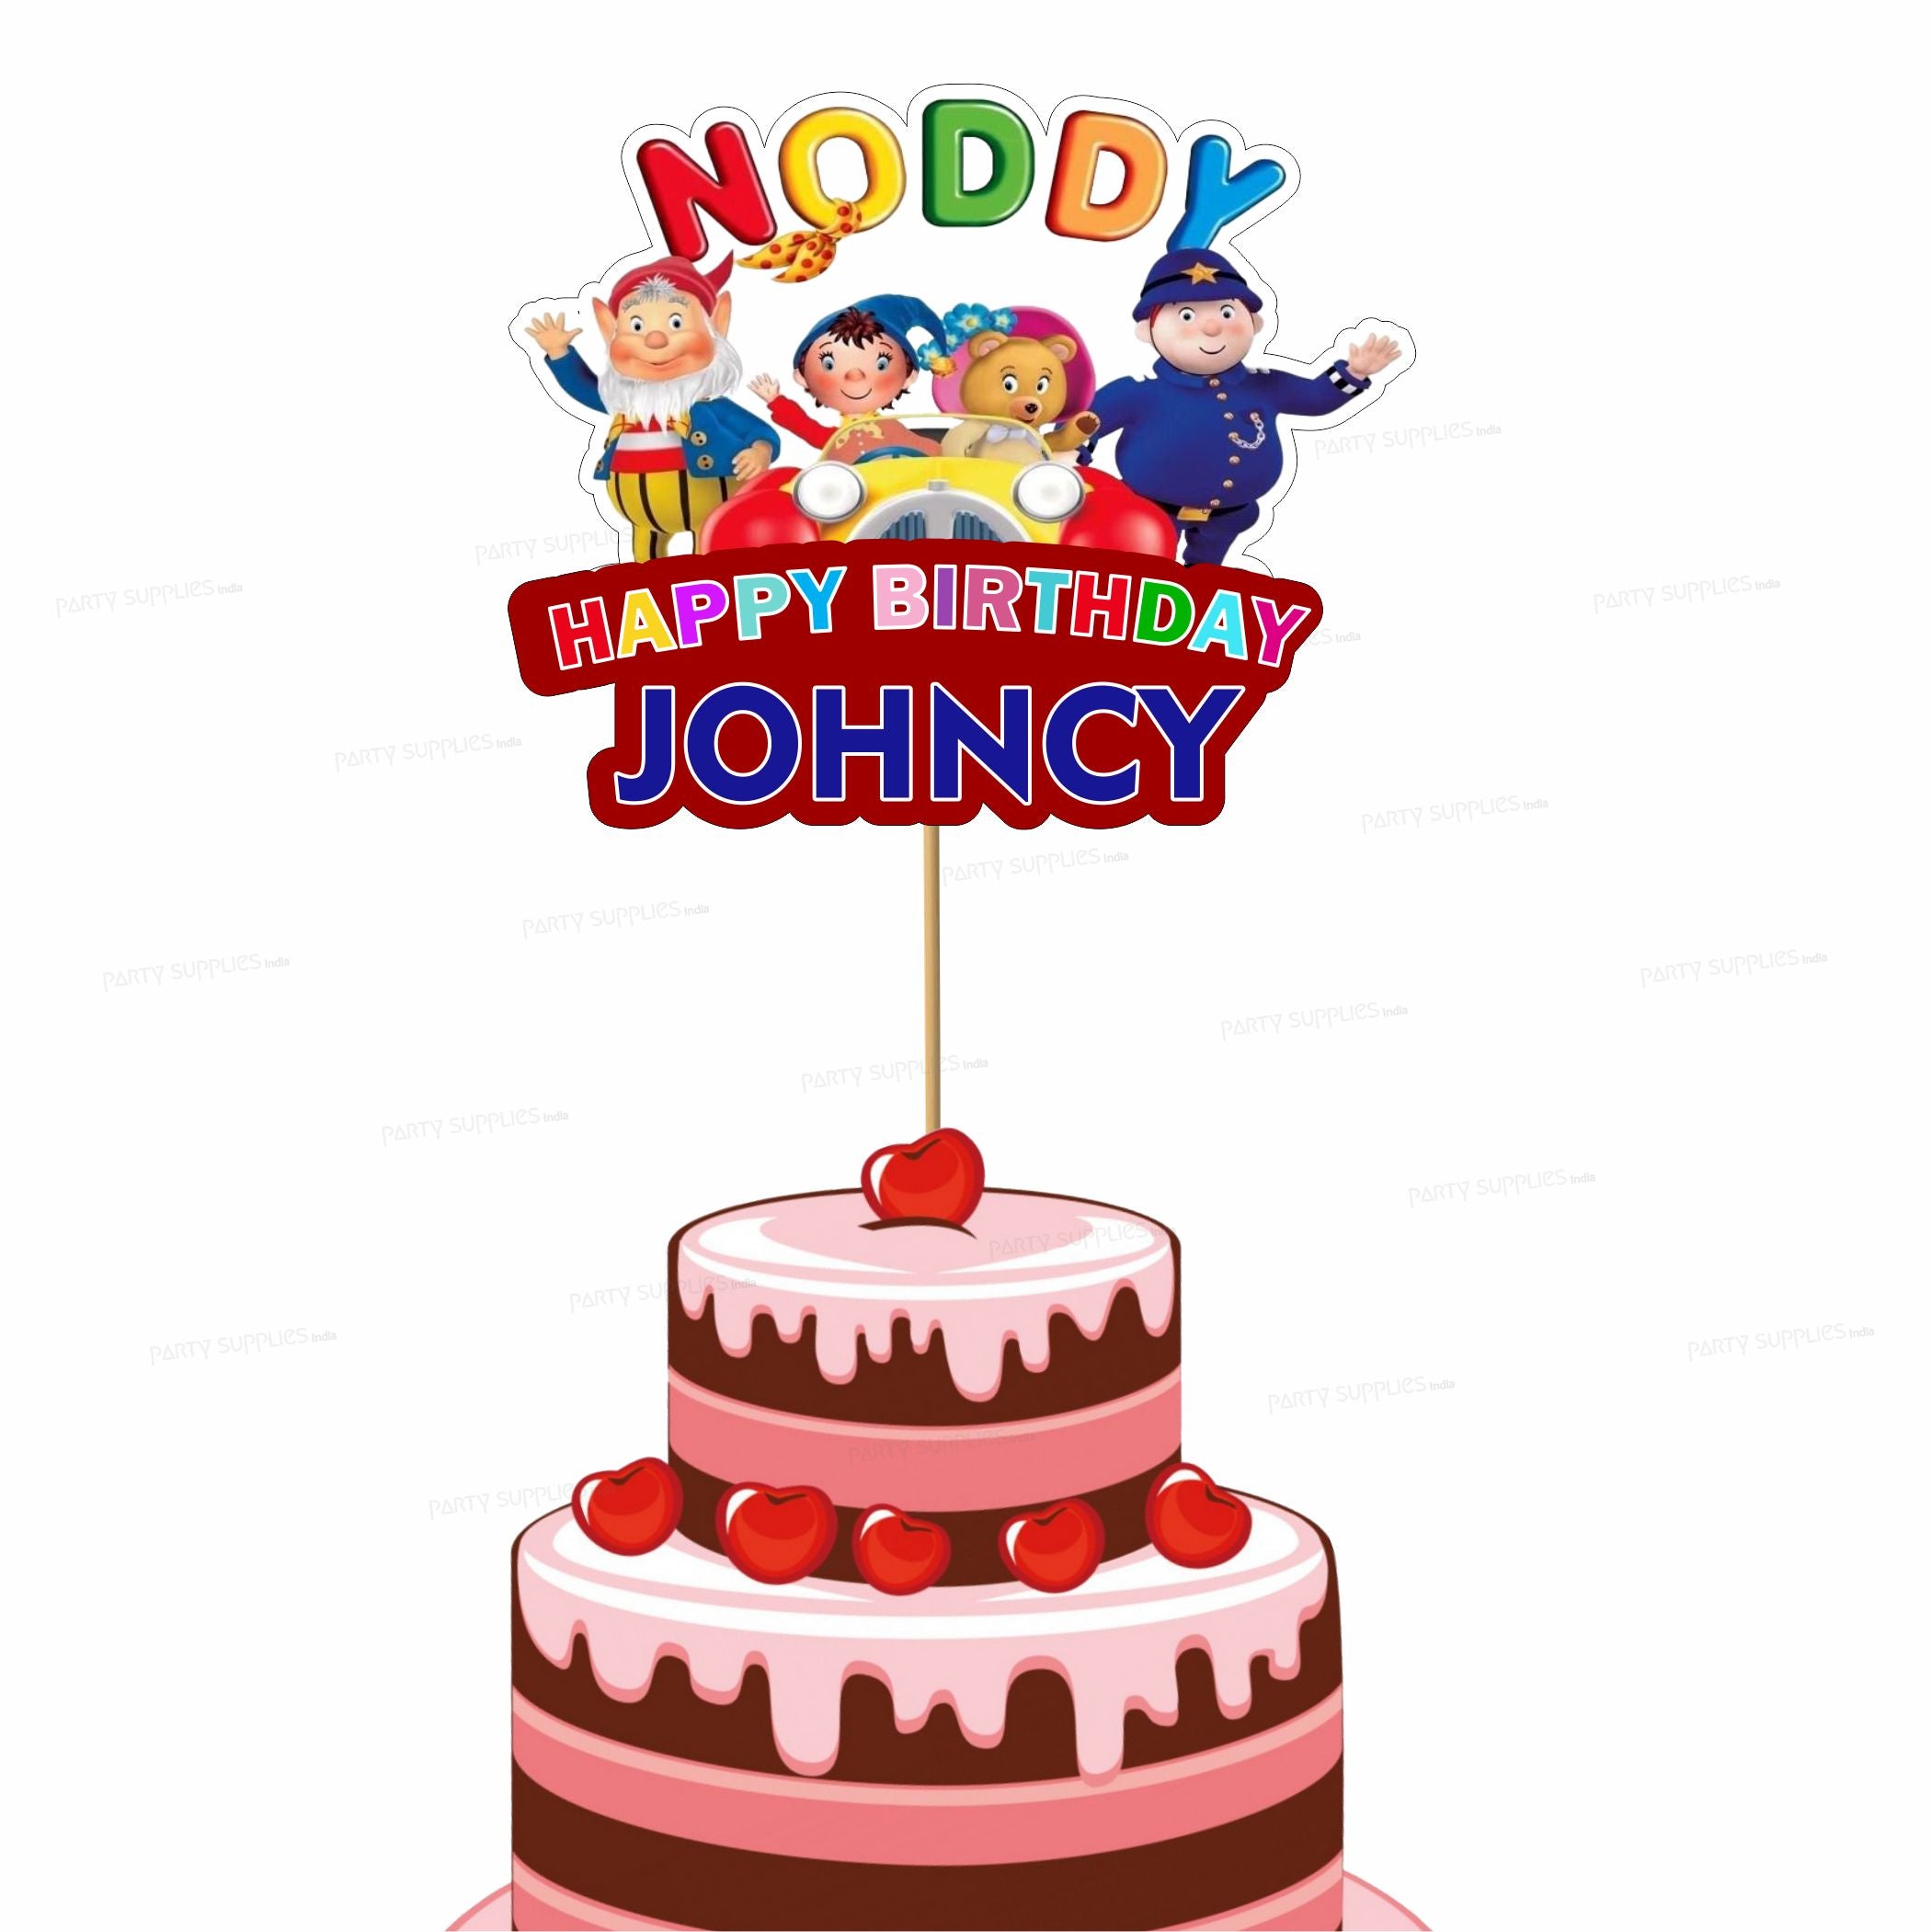 PSI Noddy Theme Cake Topper